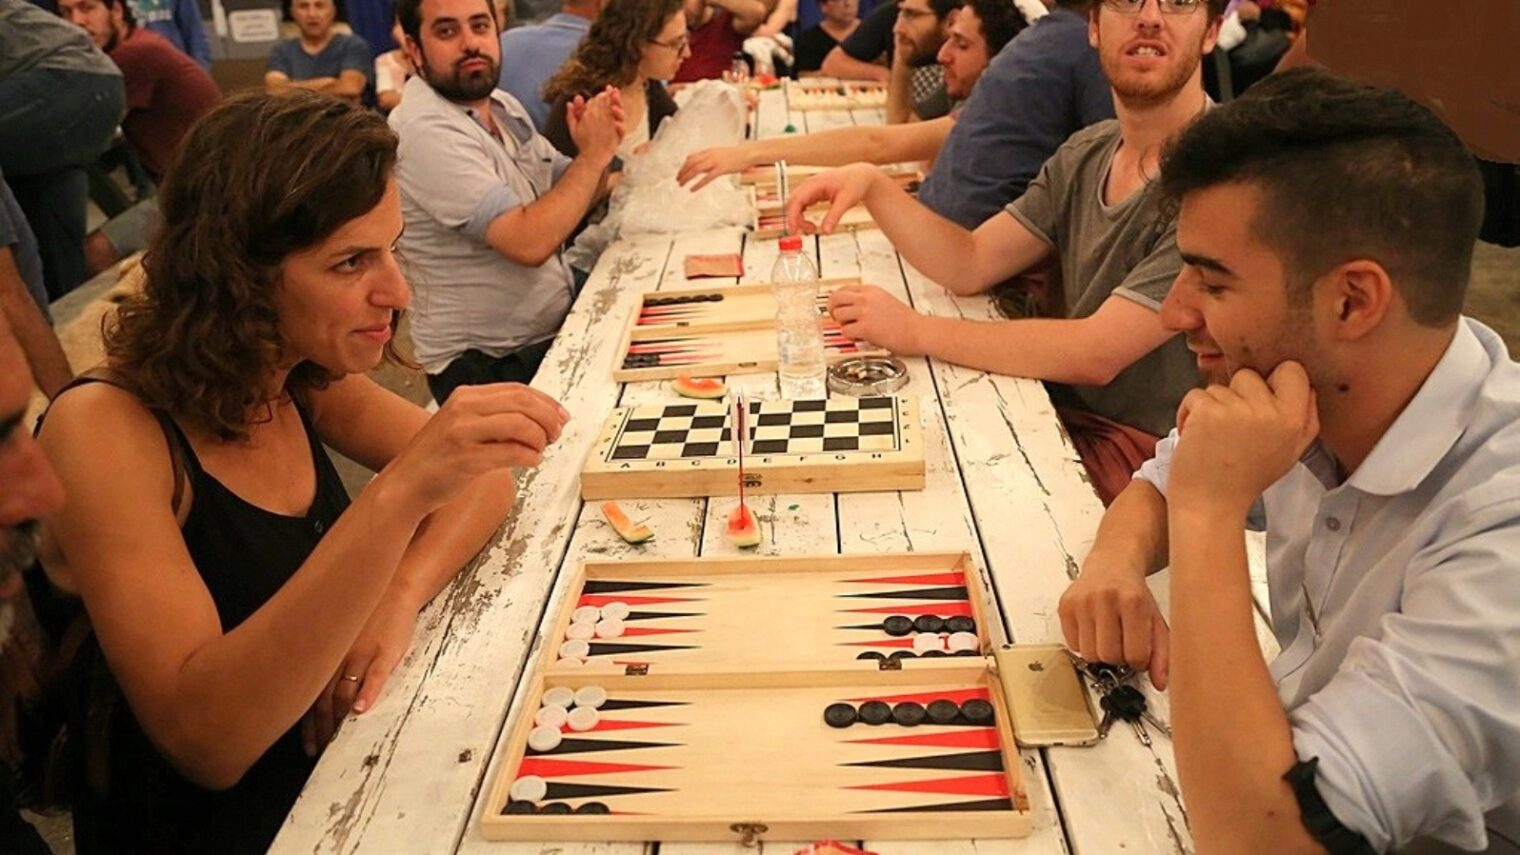 Rachel Elkabetz, left, faces off against another player at a Jerusalem Double backgammon tournament. Photo by Shabtai Amedi